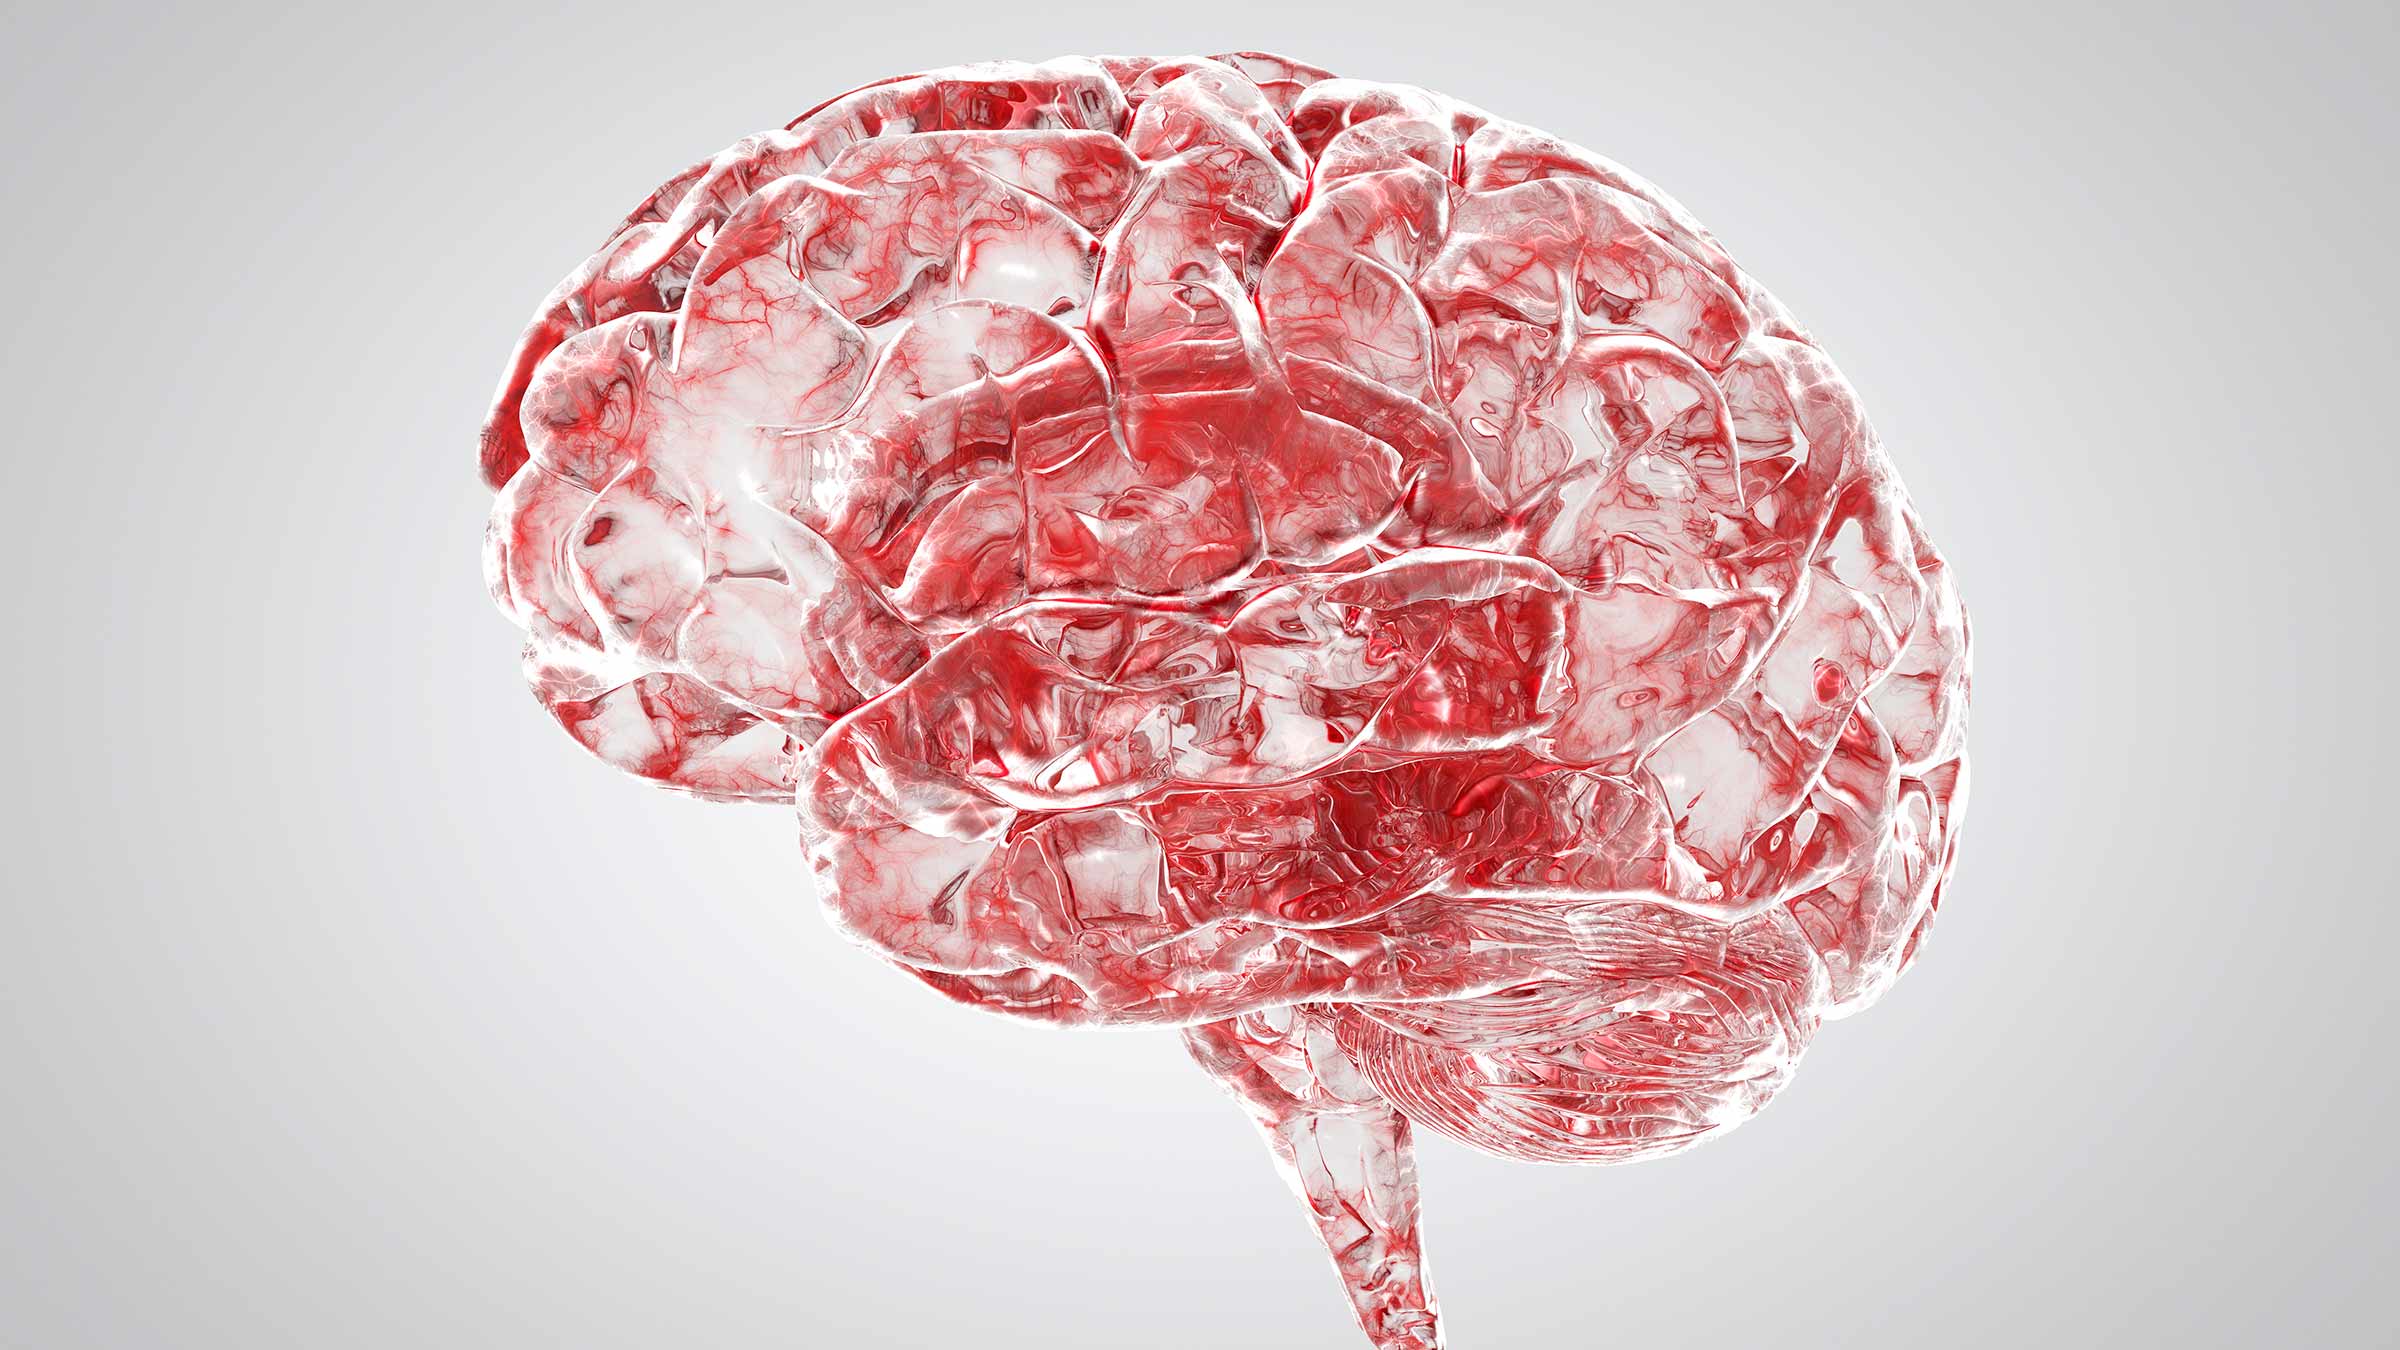 3D rendering of a brain showing blood vessels